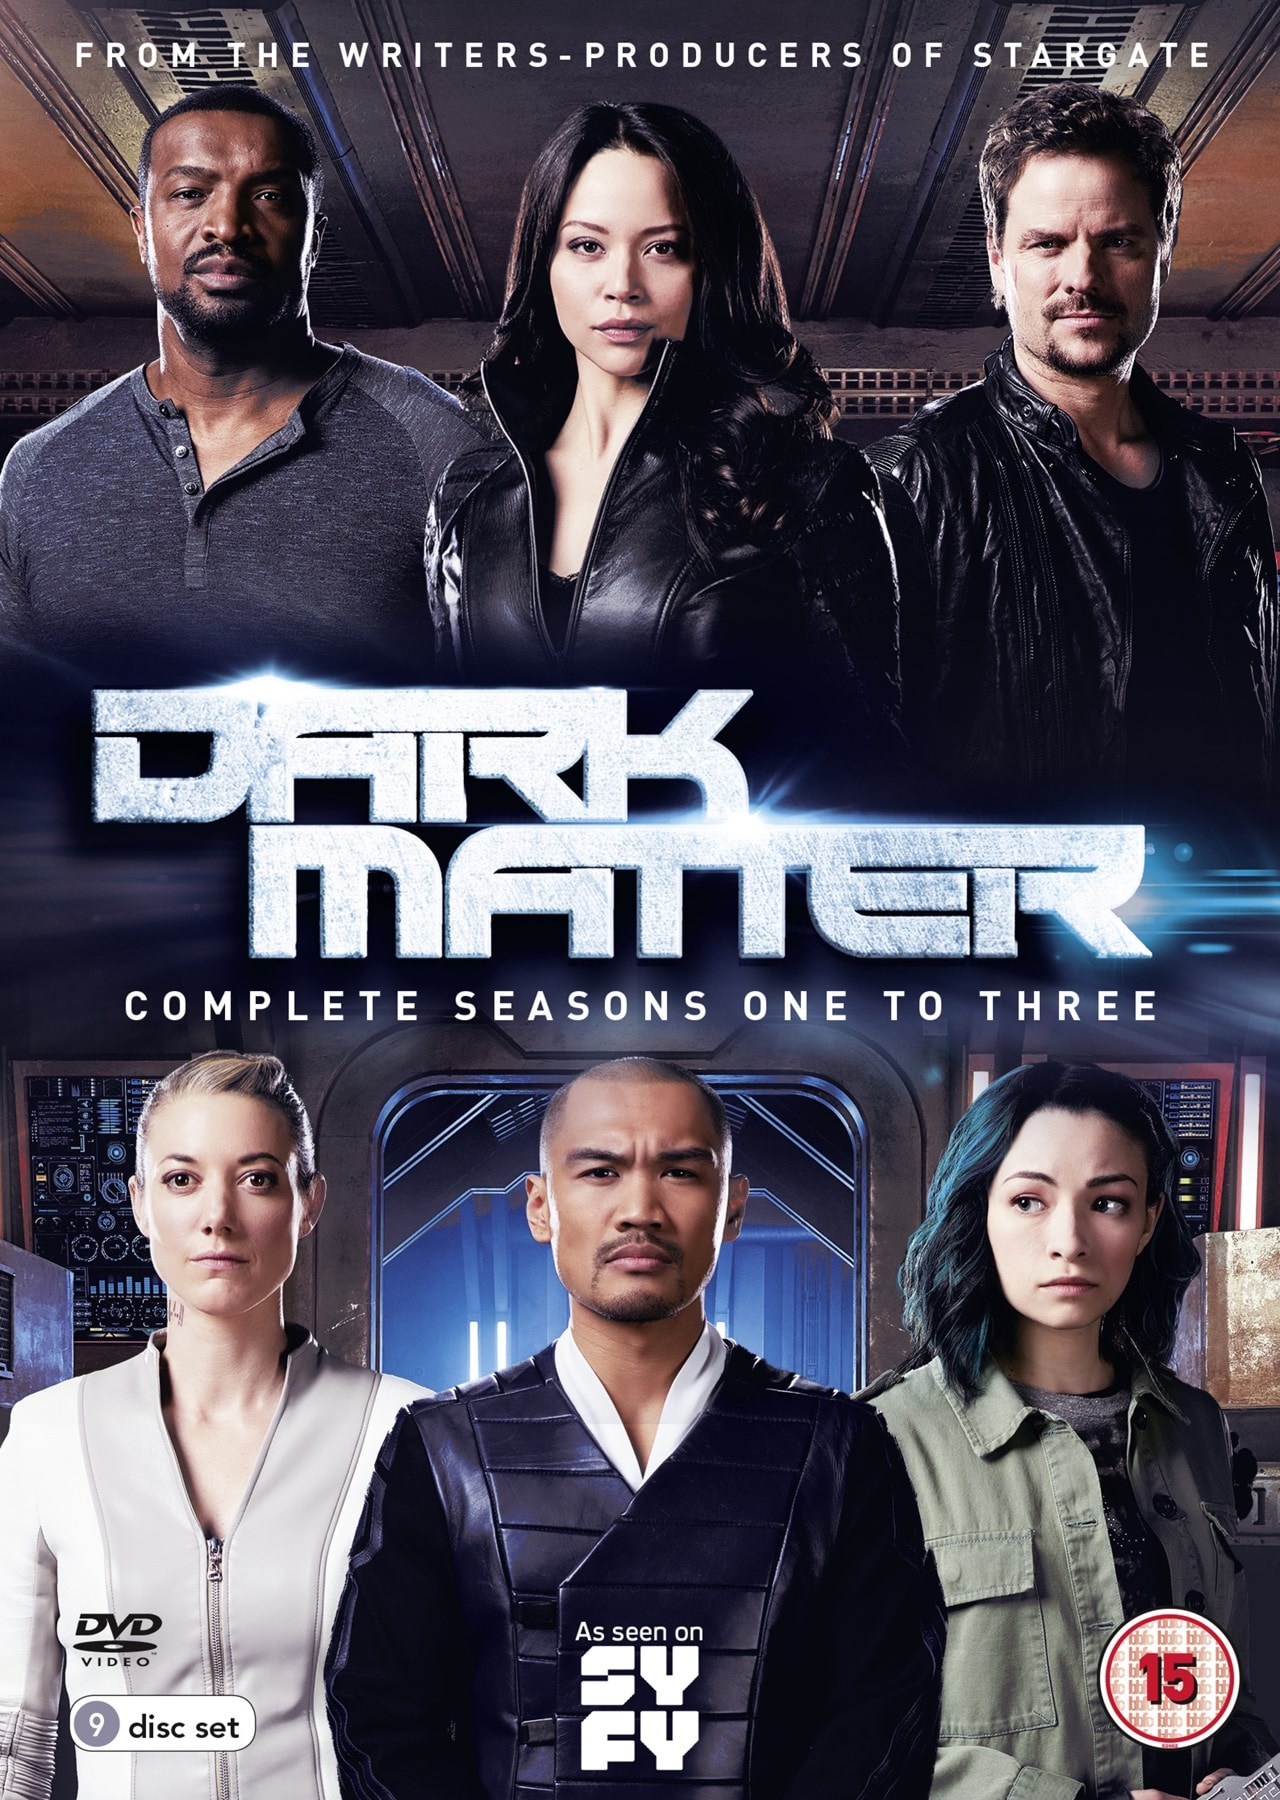 Dark Matter Complete Seasons One to Three DVD Box Set Free